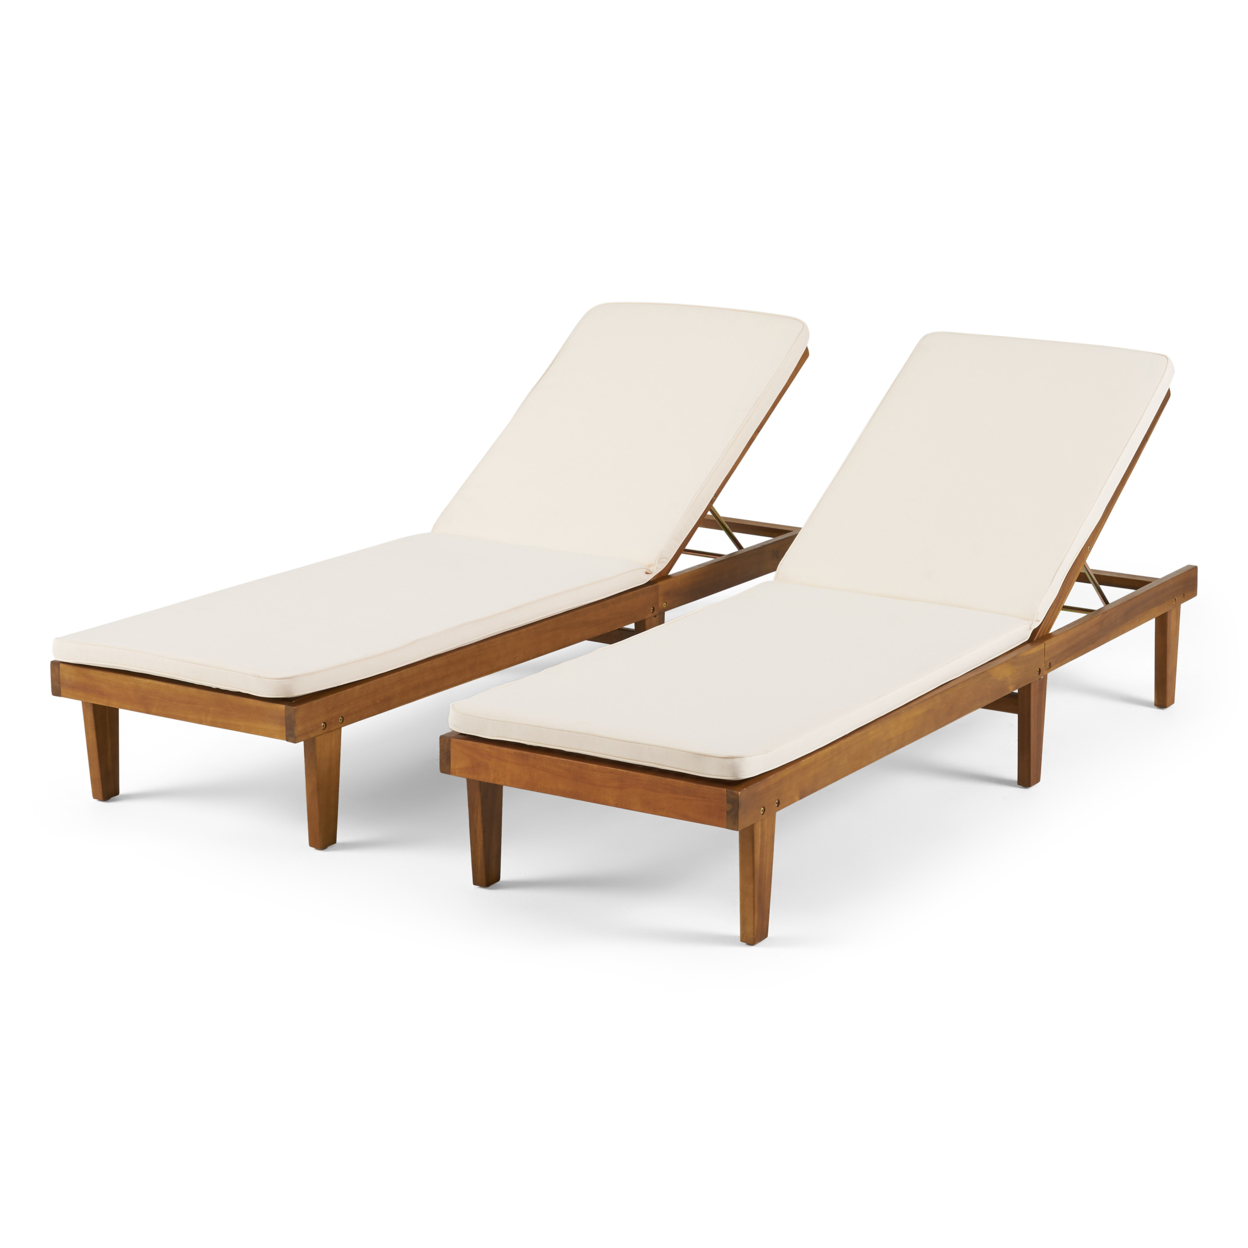 Madge Oudoor Modern Acacia Wood Chaise Lounge With Cushion (Set Of 2) - Teak Finish + Rust Orange